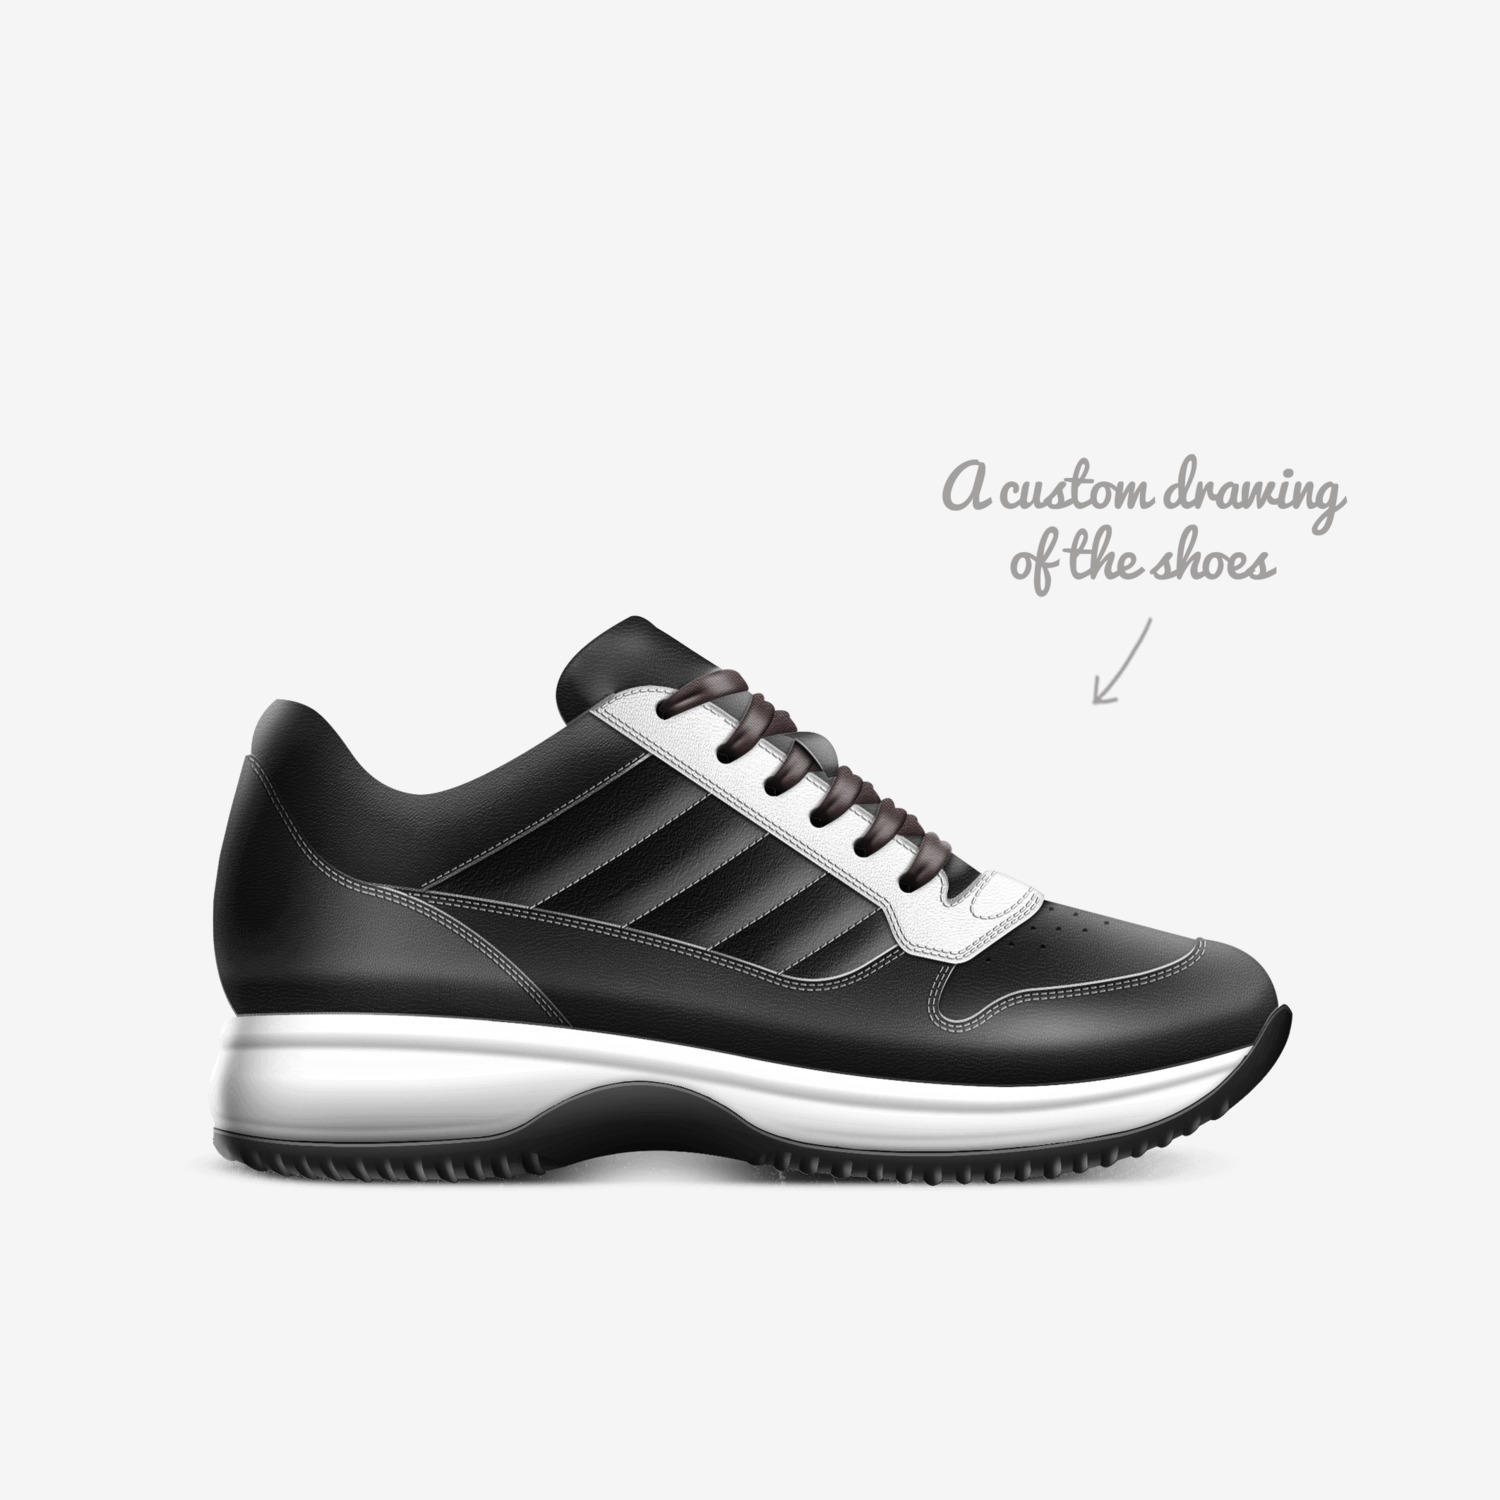 jpsings23 | A Custom Shoe concept by John Paul Cook